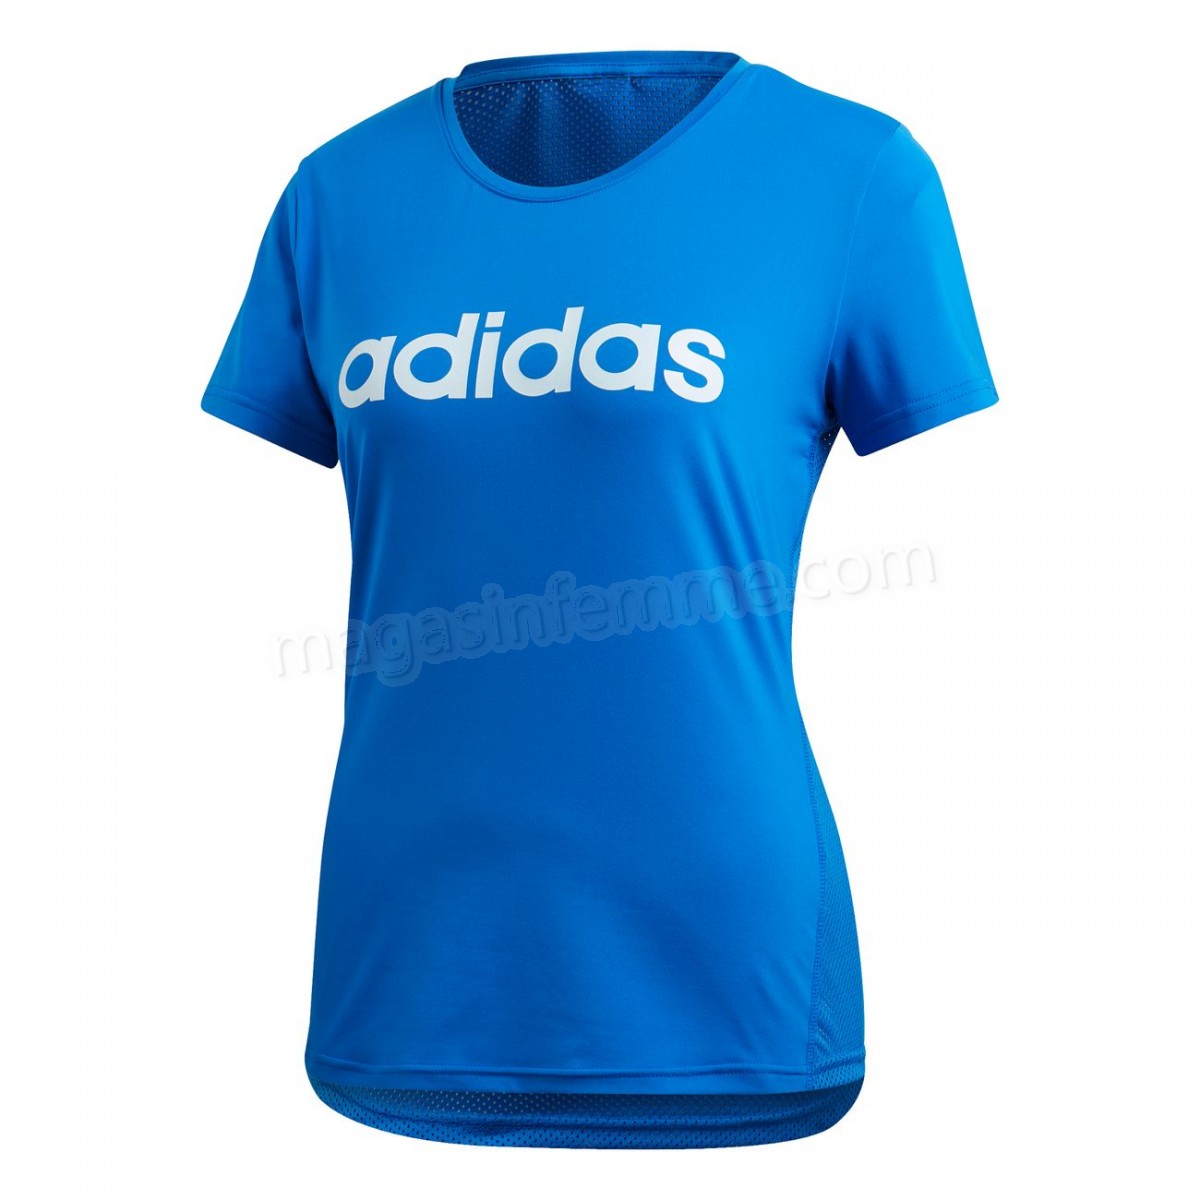 Adidas-Fitness femme ADIDAS T-shirt femme adidas Design 2 Move Logo en solde - -0